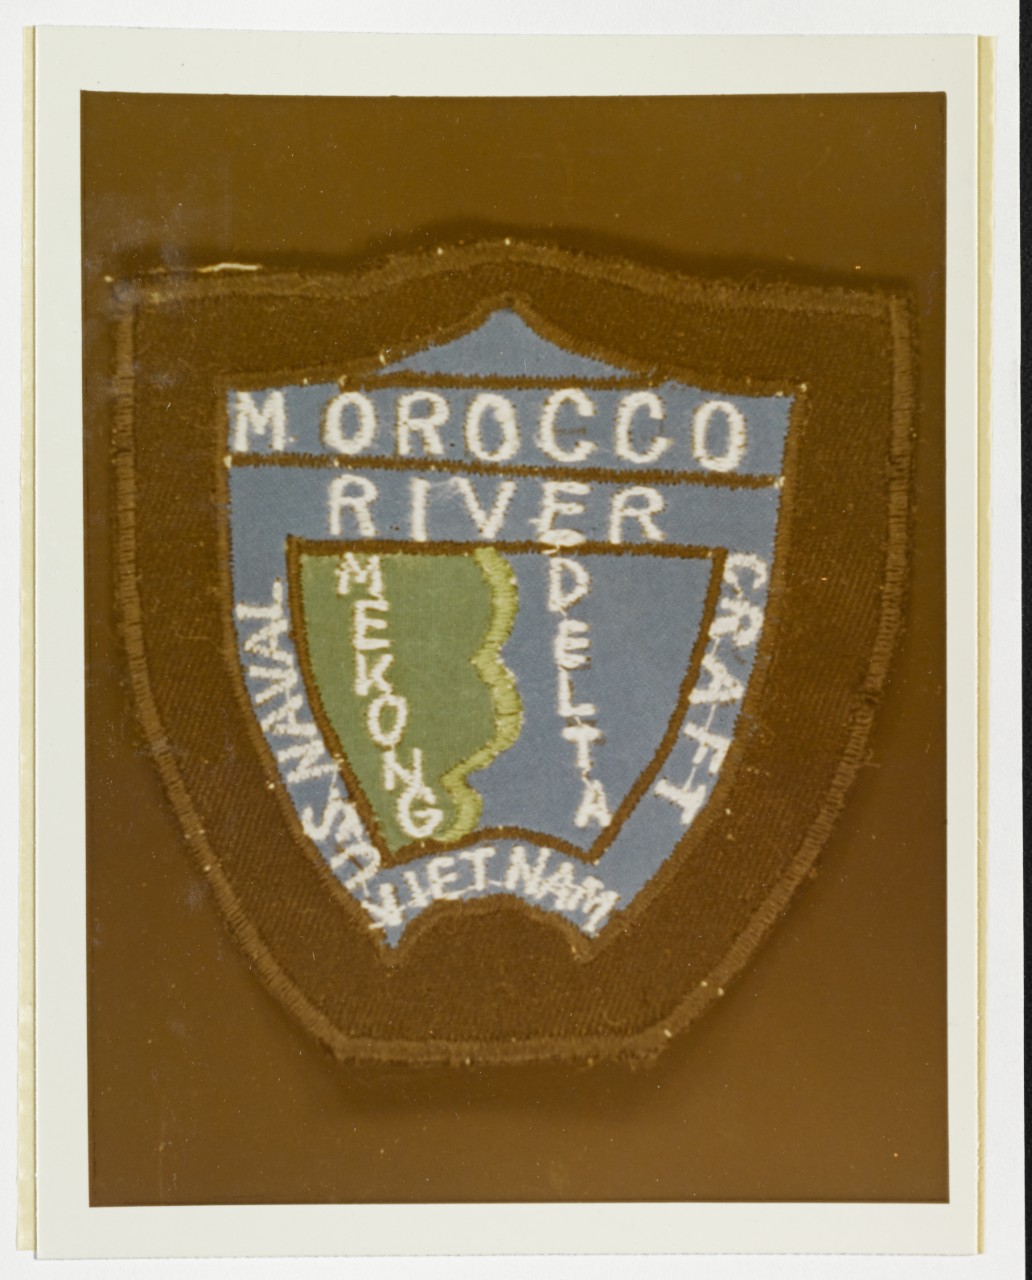 Insignia: US Navy River Craft-Morocco River, Mekong Delta